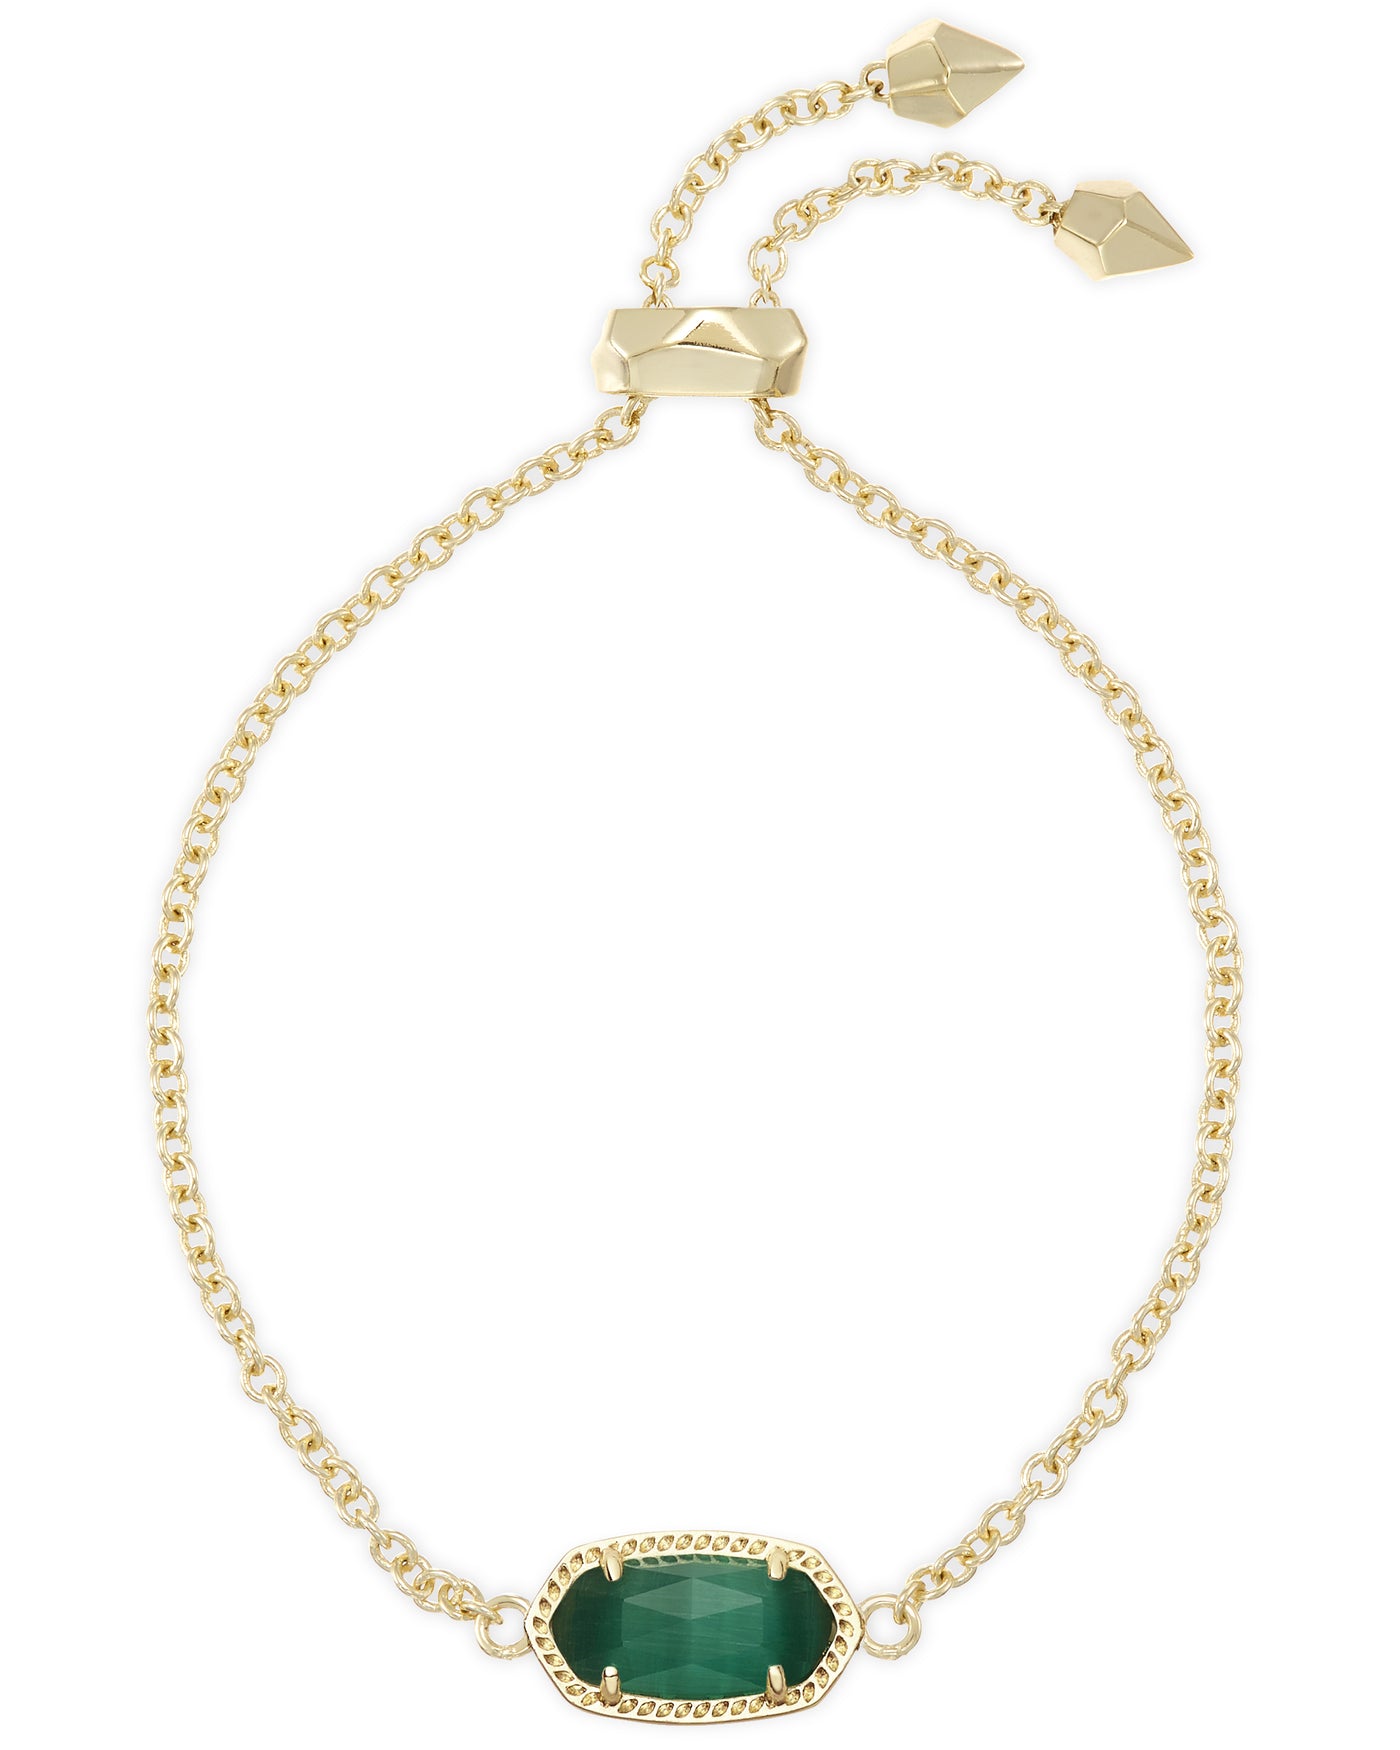 Kendra Scott Elaina Adjustable Chain Bracelet in Gold Emerald Cat's Eye on white background.